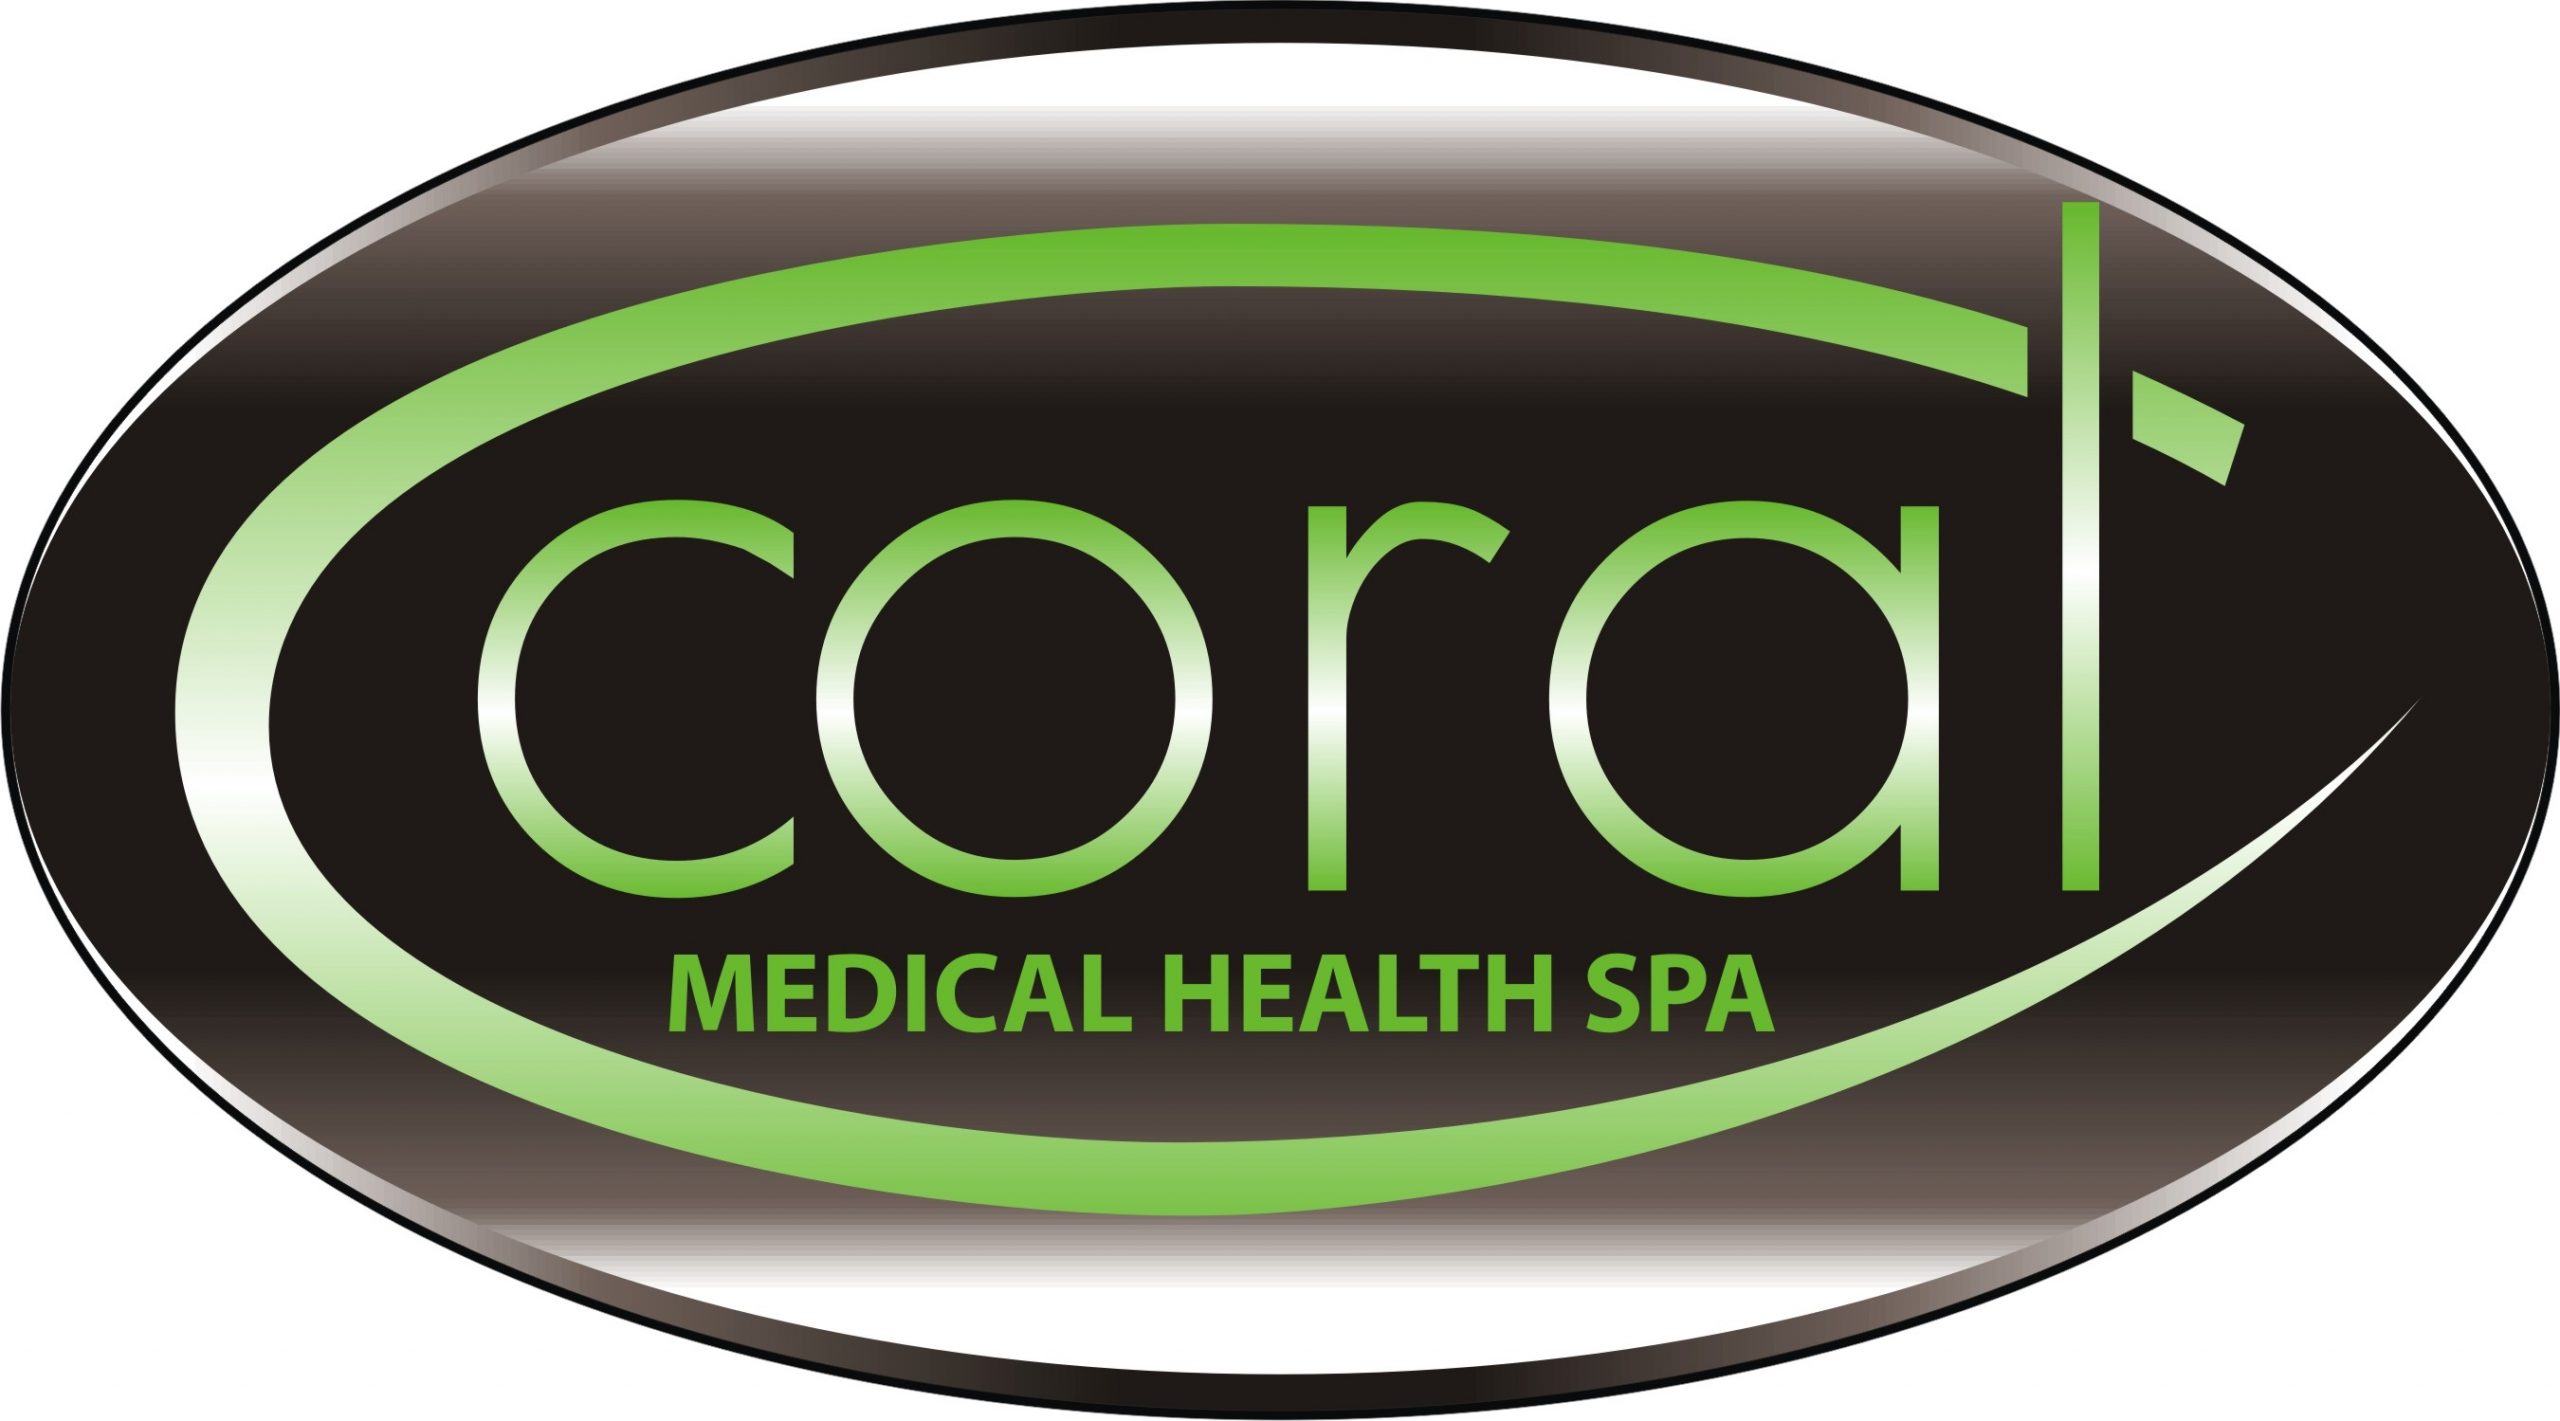 Coral spa. Коралл Medical. Corall Medical logo. Medical Spa logo. Баунти спа логотип.